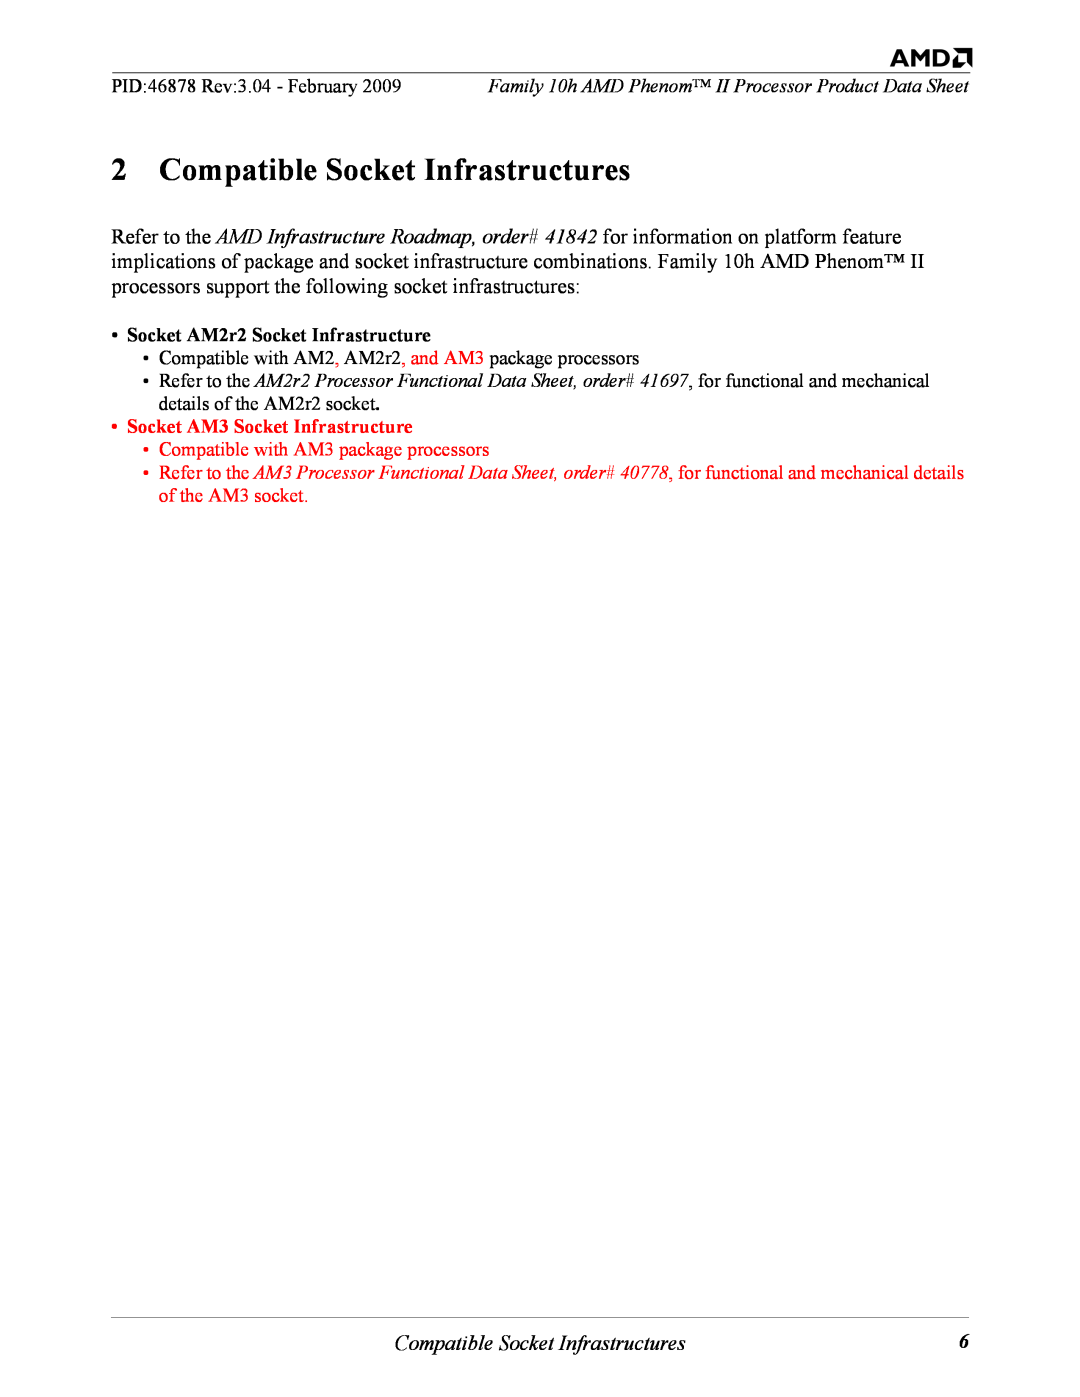 AMD II manual Compatible Socket Infrastructures, Socket AM3 Socket Infrastructure 